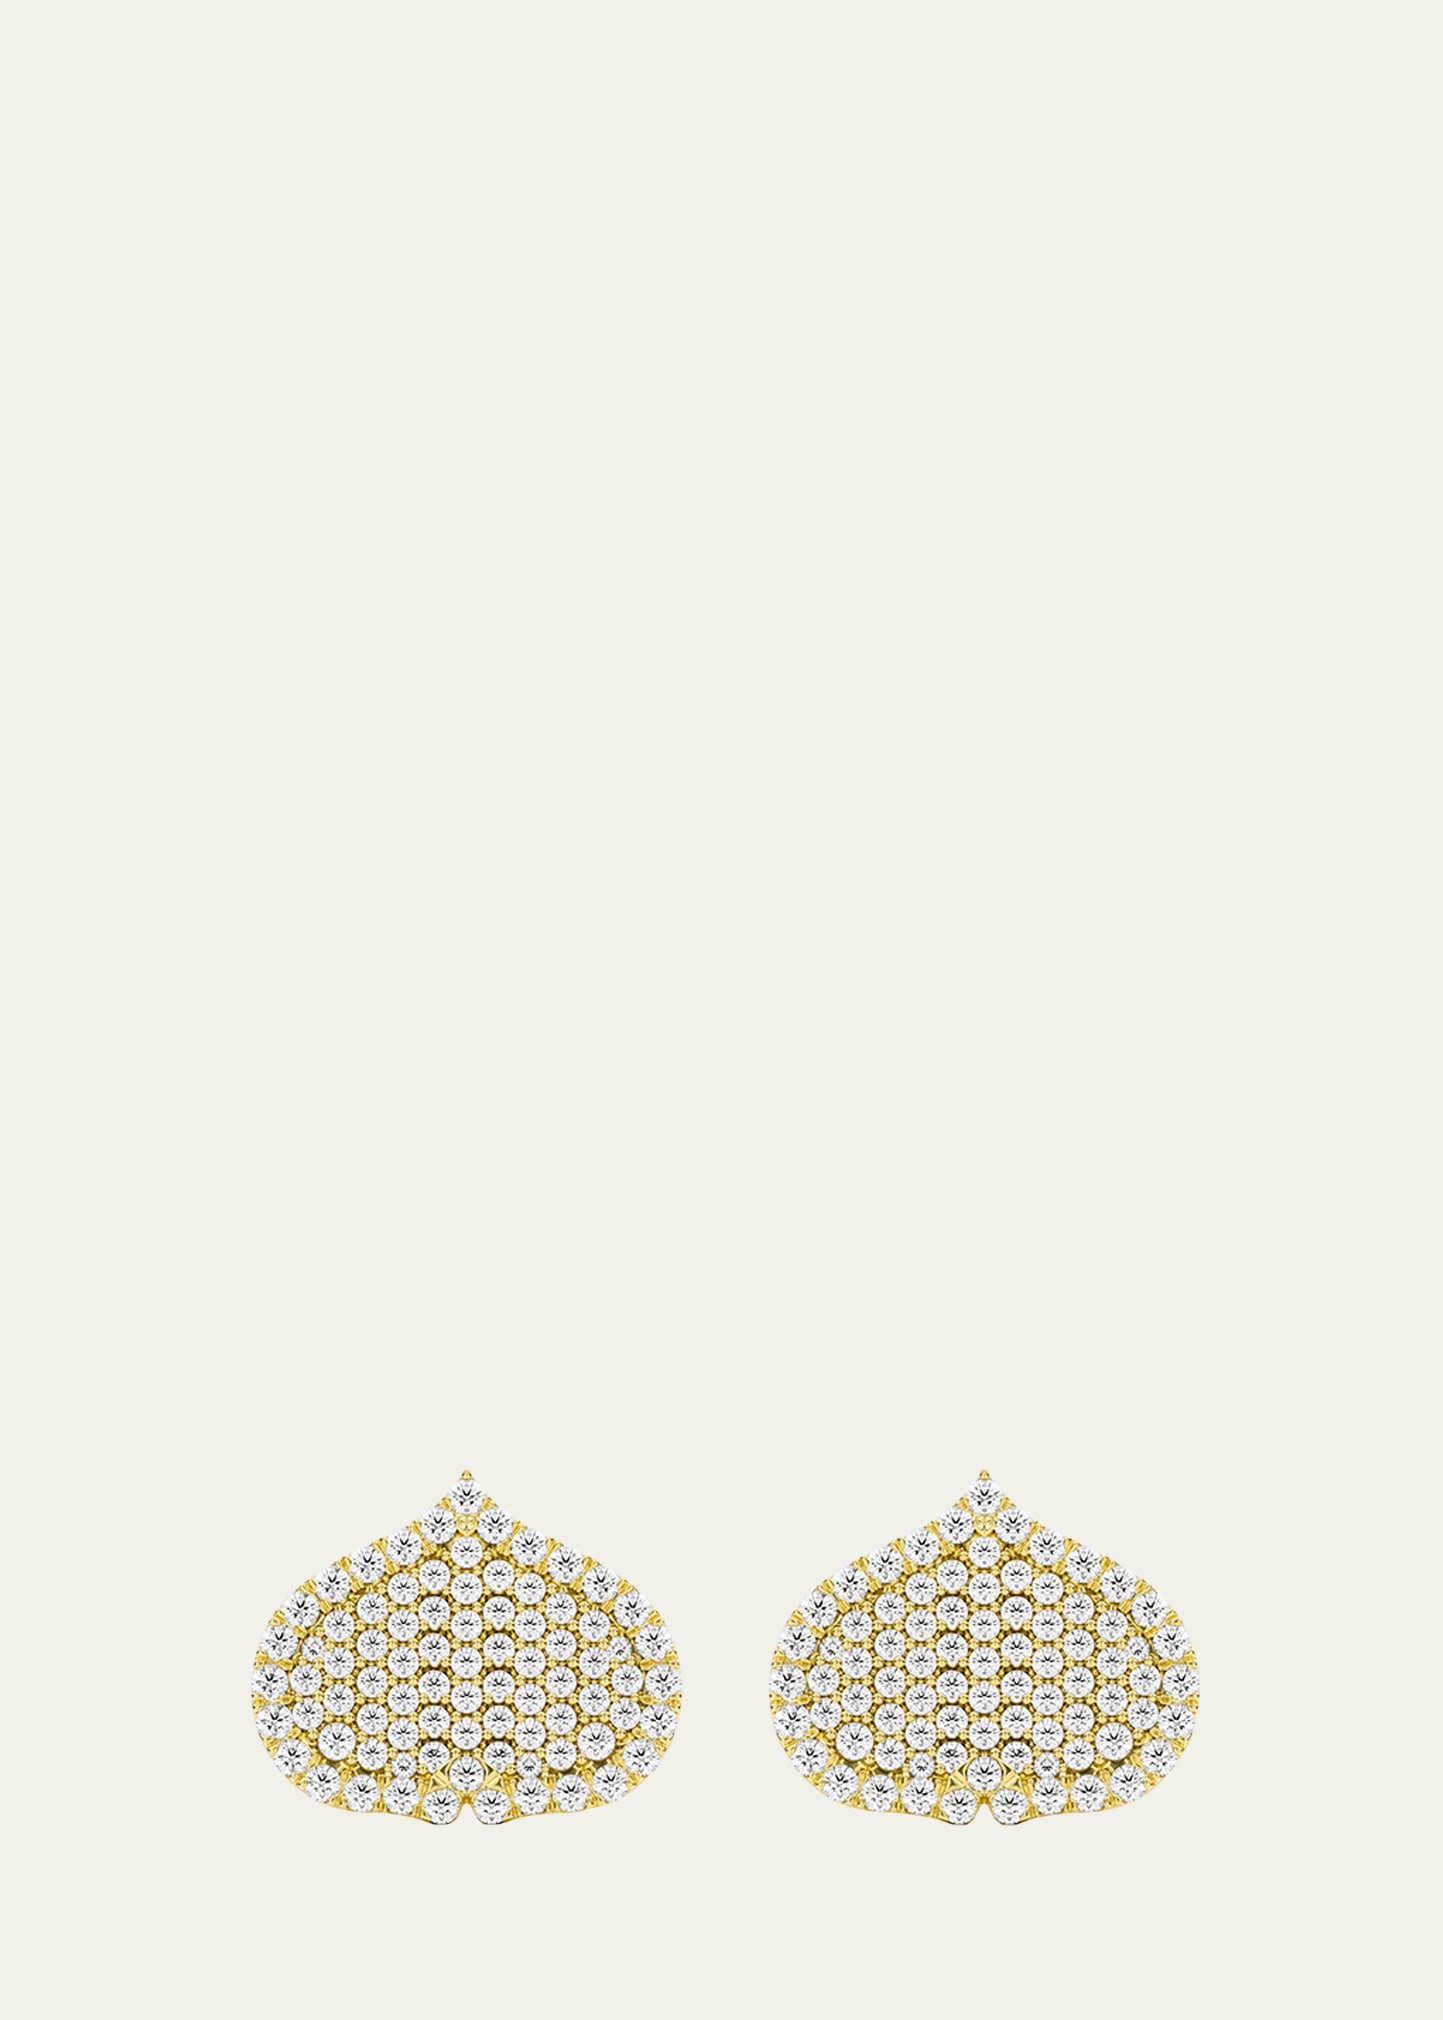 Eye Adore Stud Earrings in Yellow Gold, 15mm